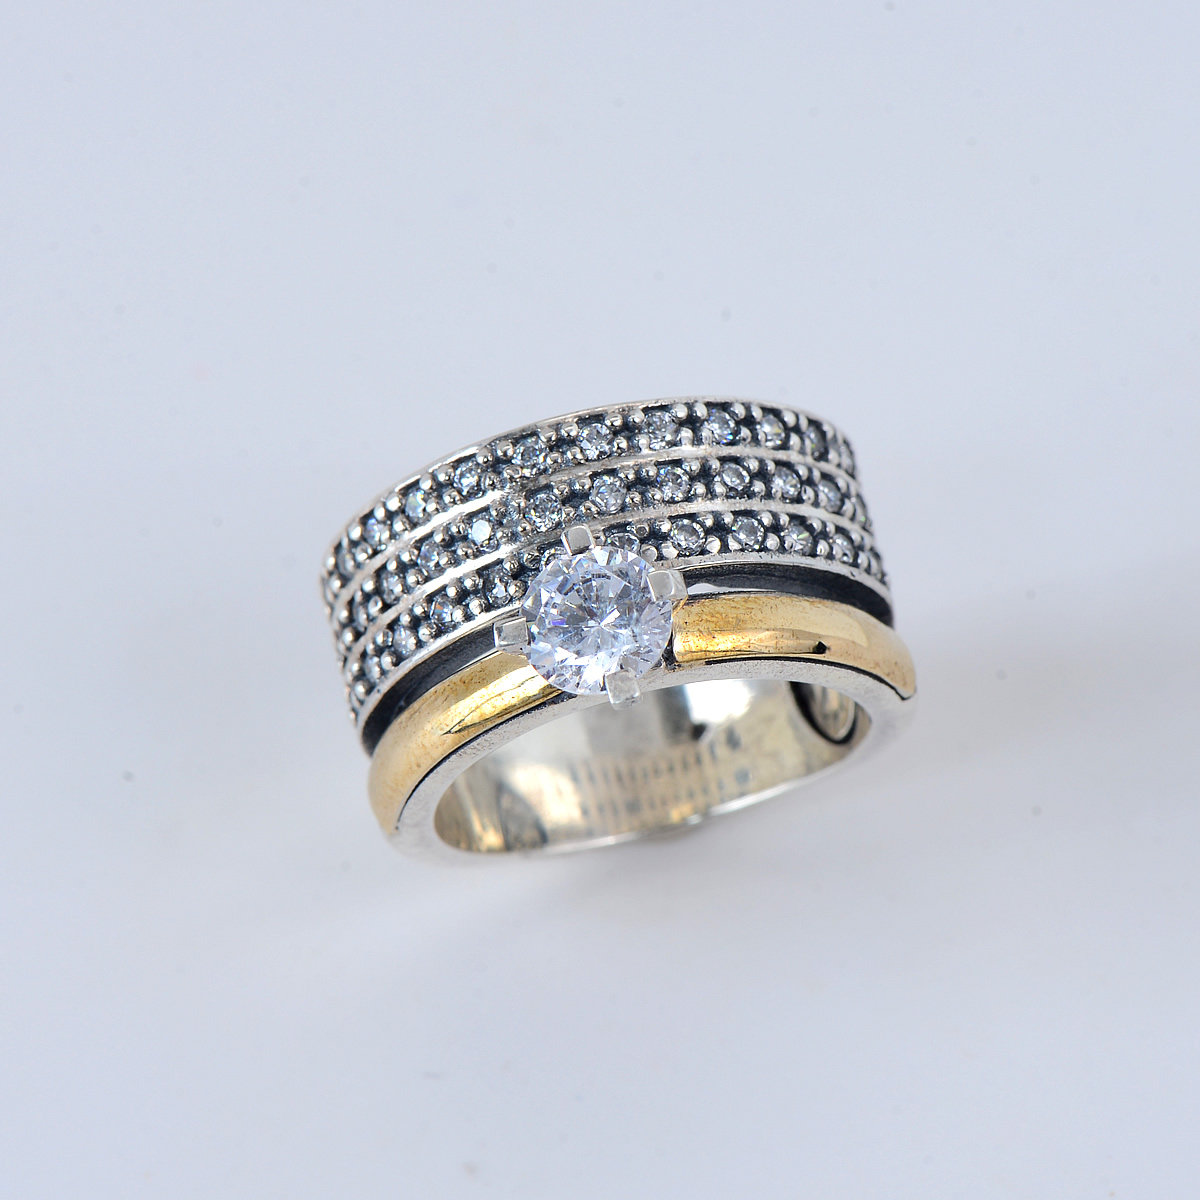 Elegant Sterling Silver 9.25 Ring With Goldtone Plating